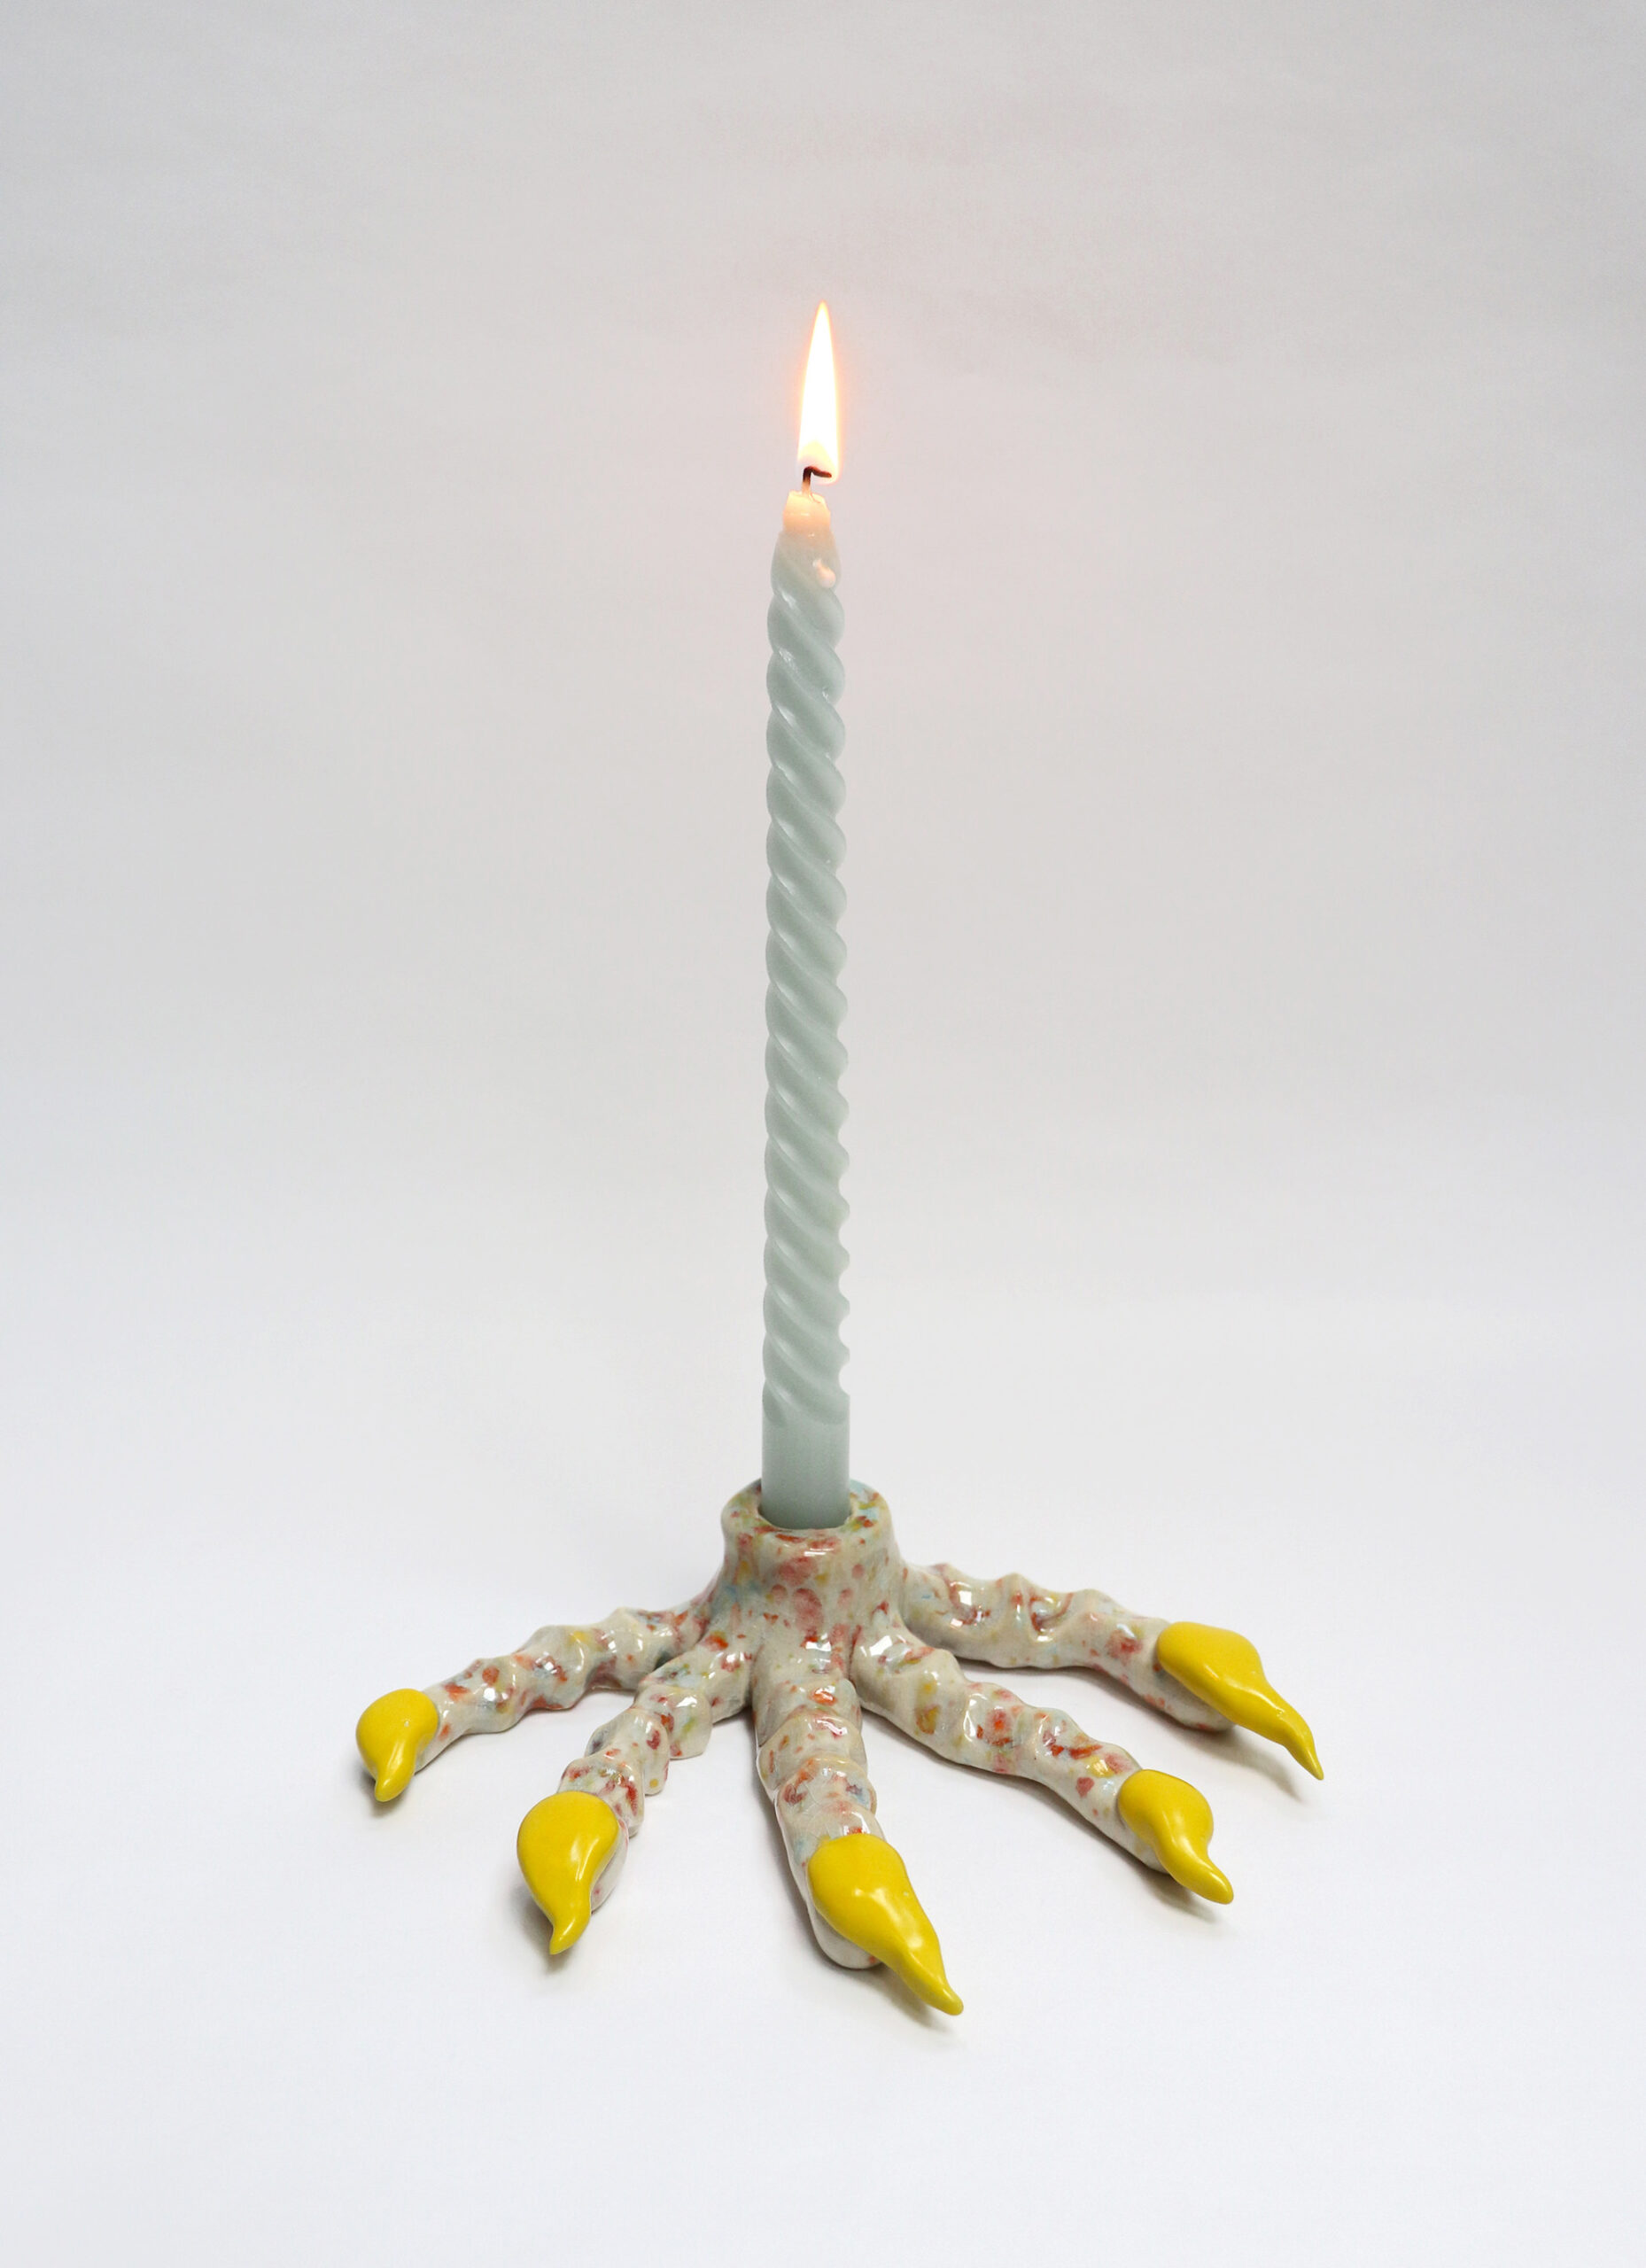 Yellow-nail-Paw-Candlestick-by-Naomi-Gilon-Earthenware-ceramics-UK-online-size:15 x 18 cm-year:2021